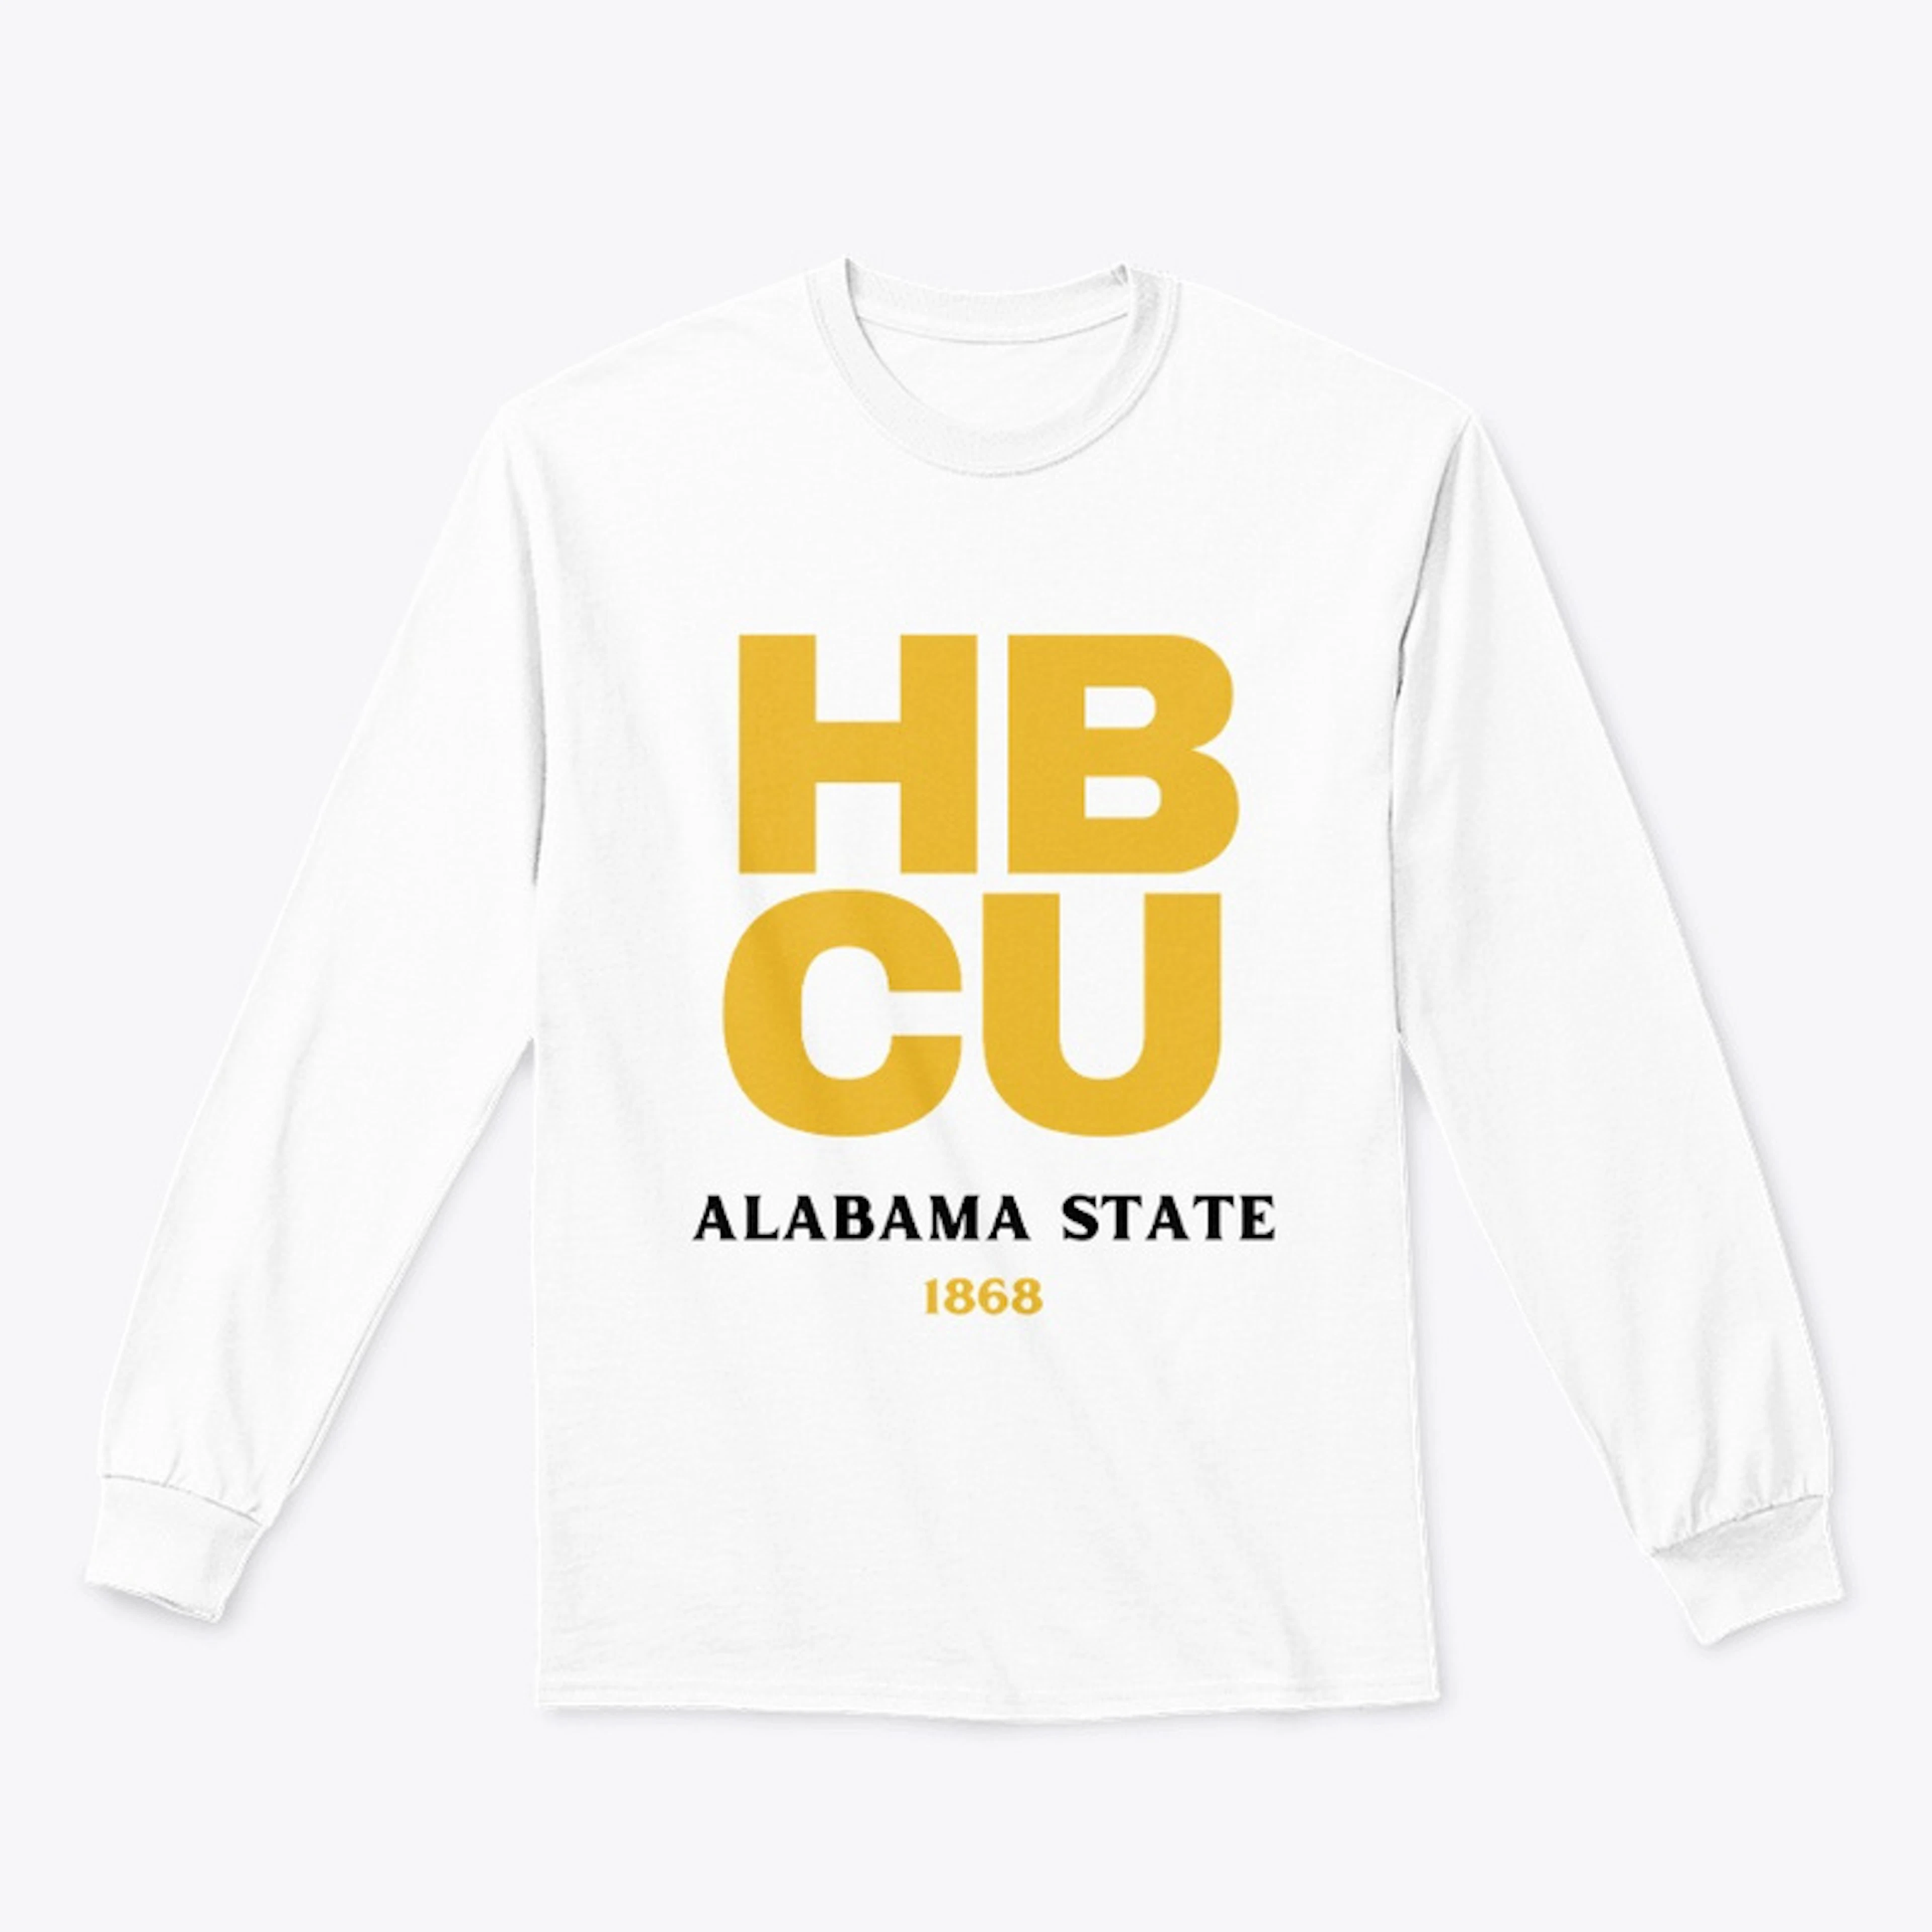 HBCU: Alabama State University